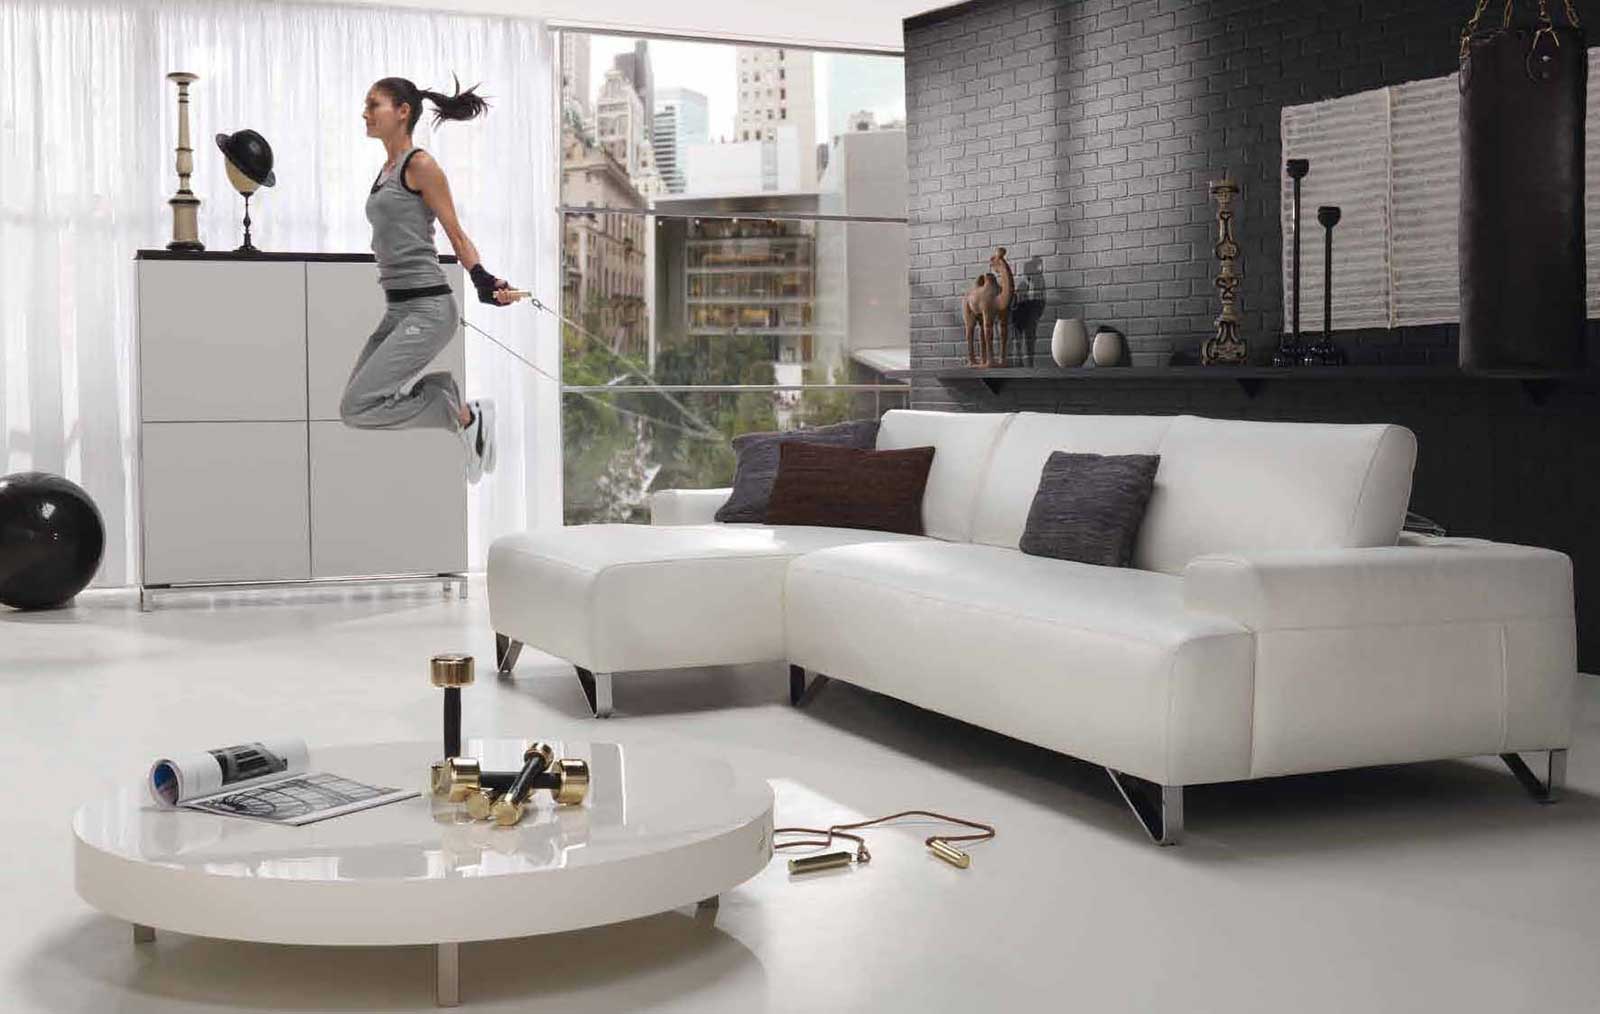 Contemporary Sofas for Home Interior awesome modern interior design ideas with spacious white room decor and  white DVVKITB